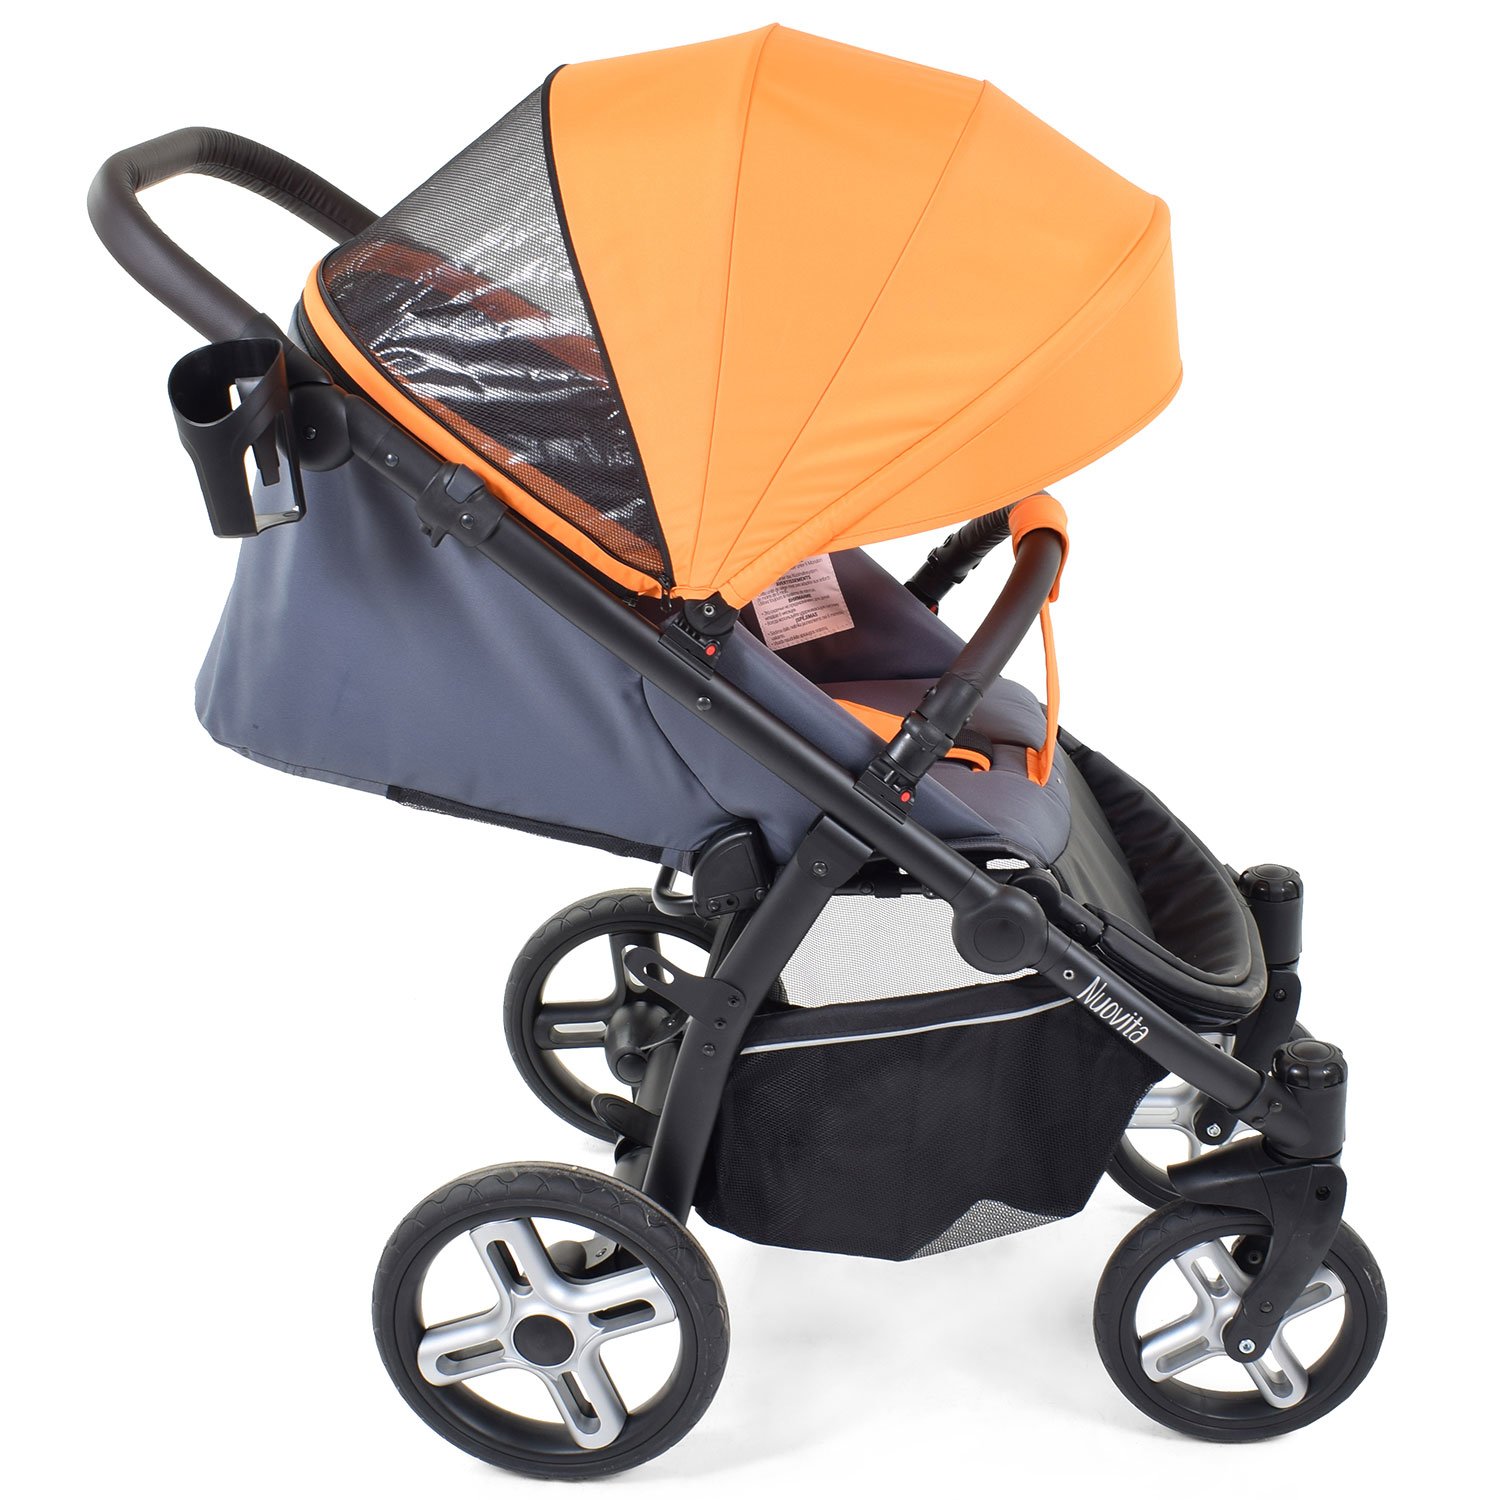 Прогулочная коляска Nuovita Modo Terreno, цвет Arancione grigio / Оранжево-серый  